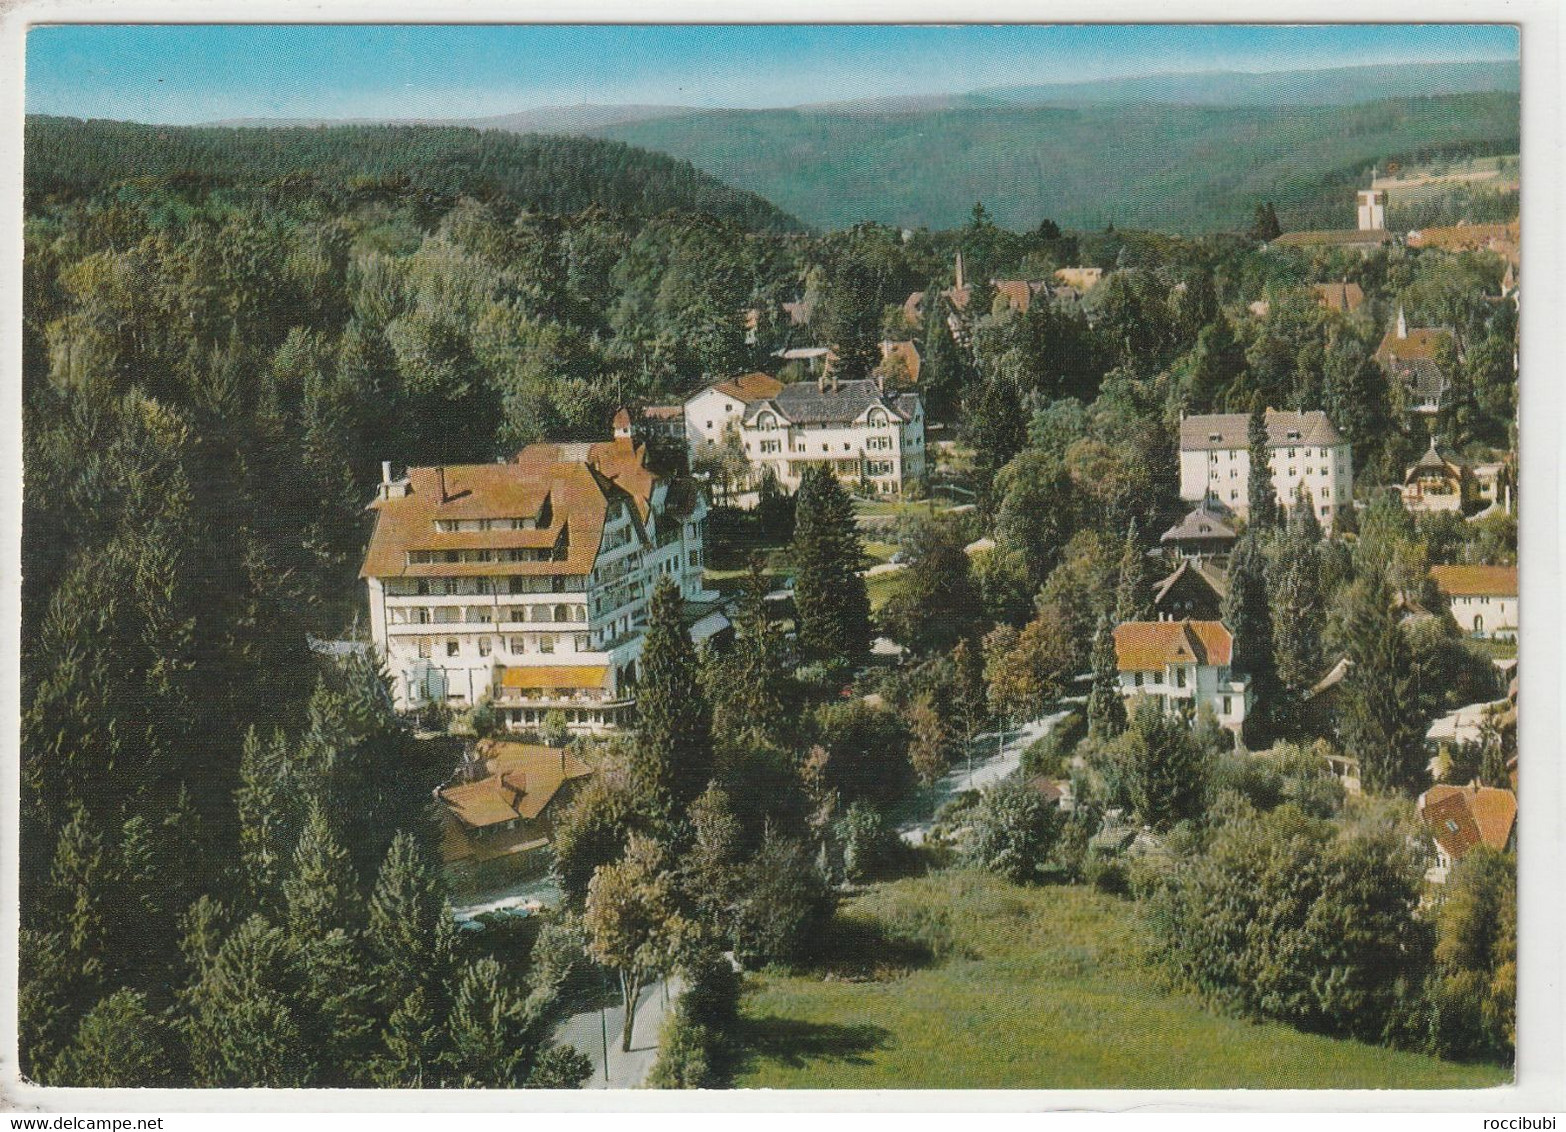 Freudenstadt, Baden-Württemberg - Freudenstadt